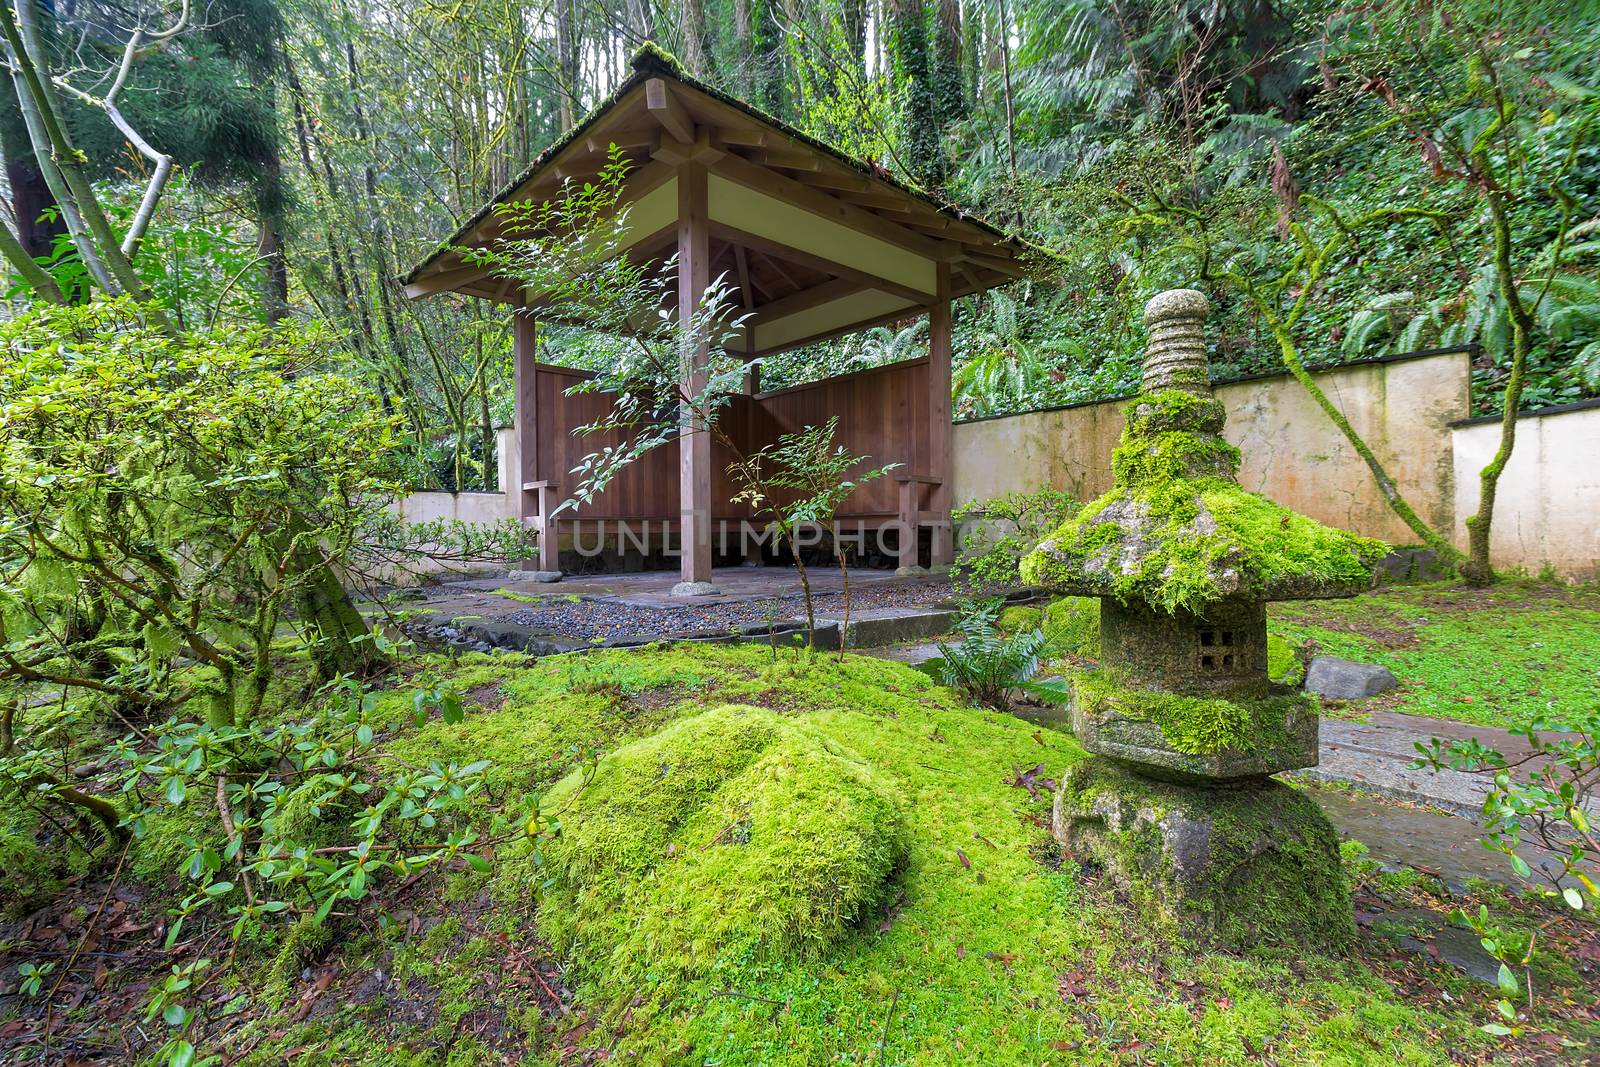 Wood Shelter at Japanese Garden by jpldesigns